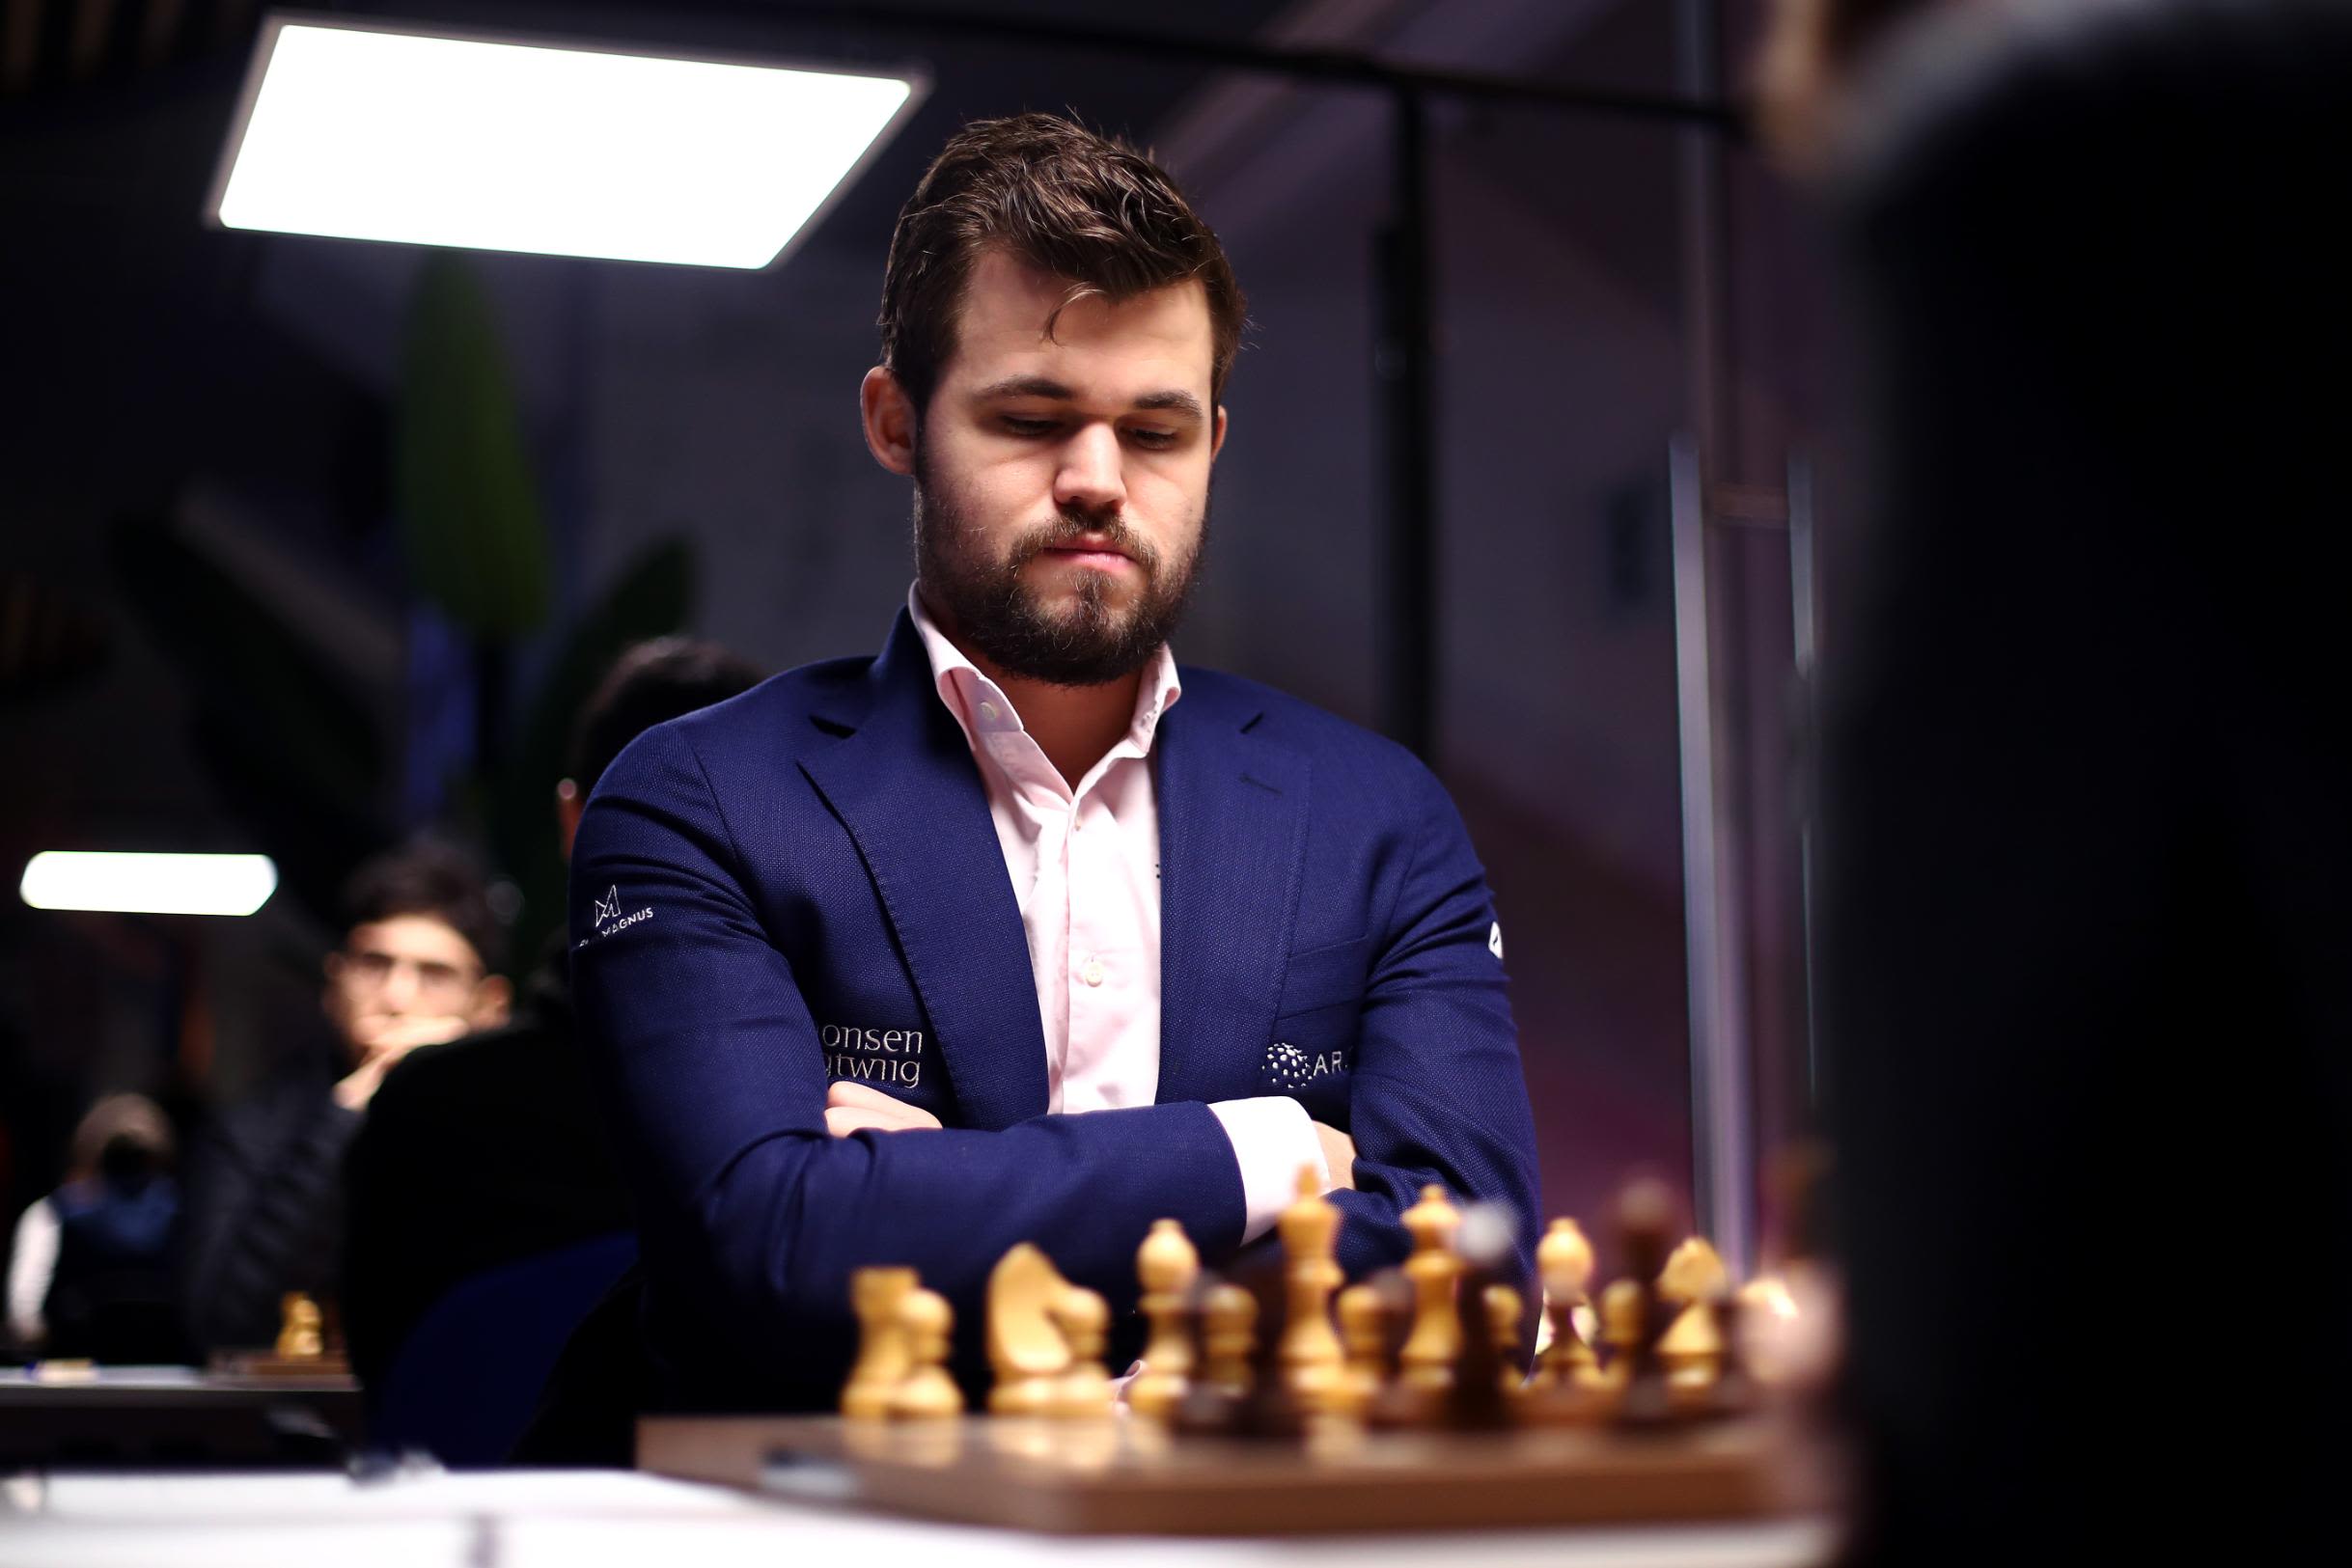 chess24 - Magnus Carlsen and Alireza Firouzja meet again